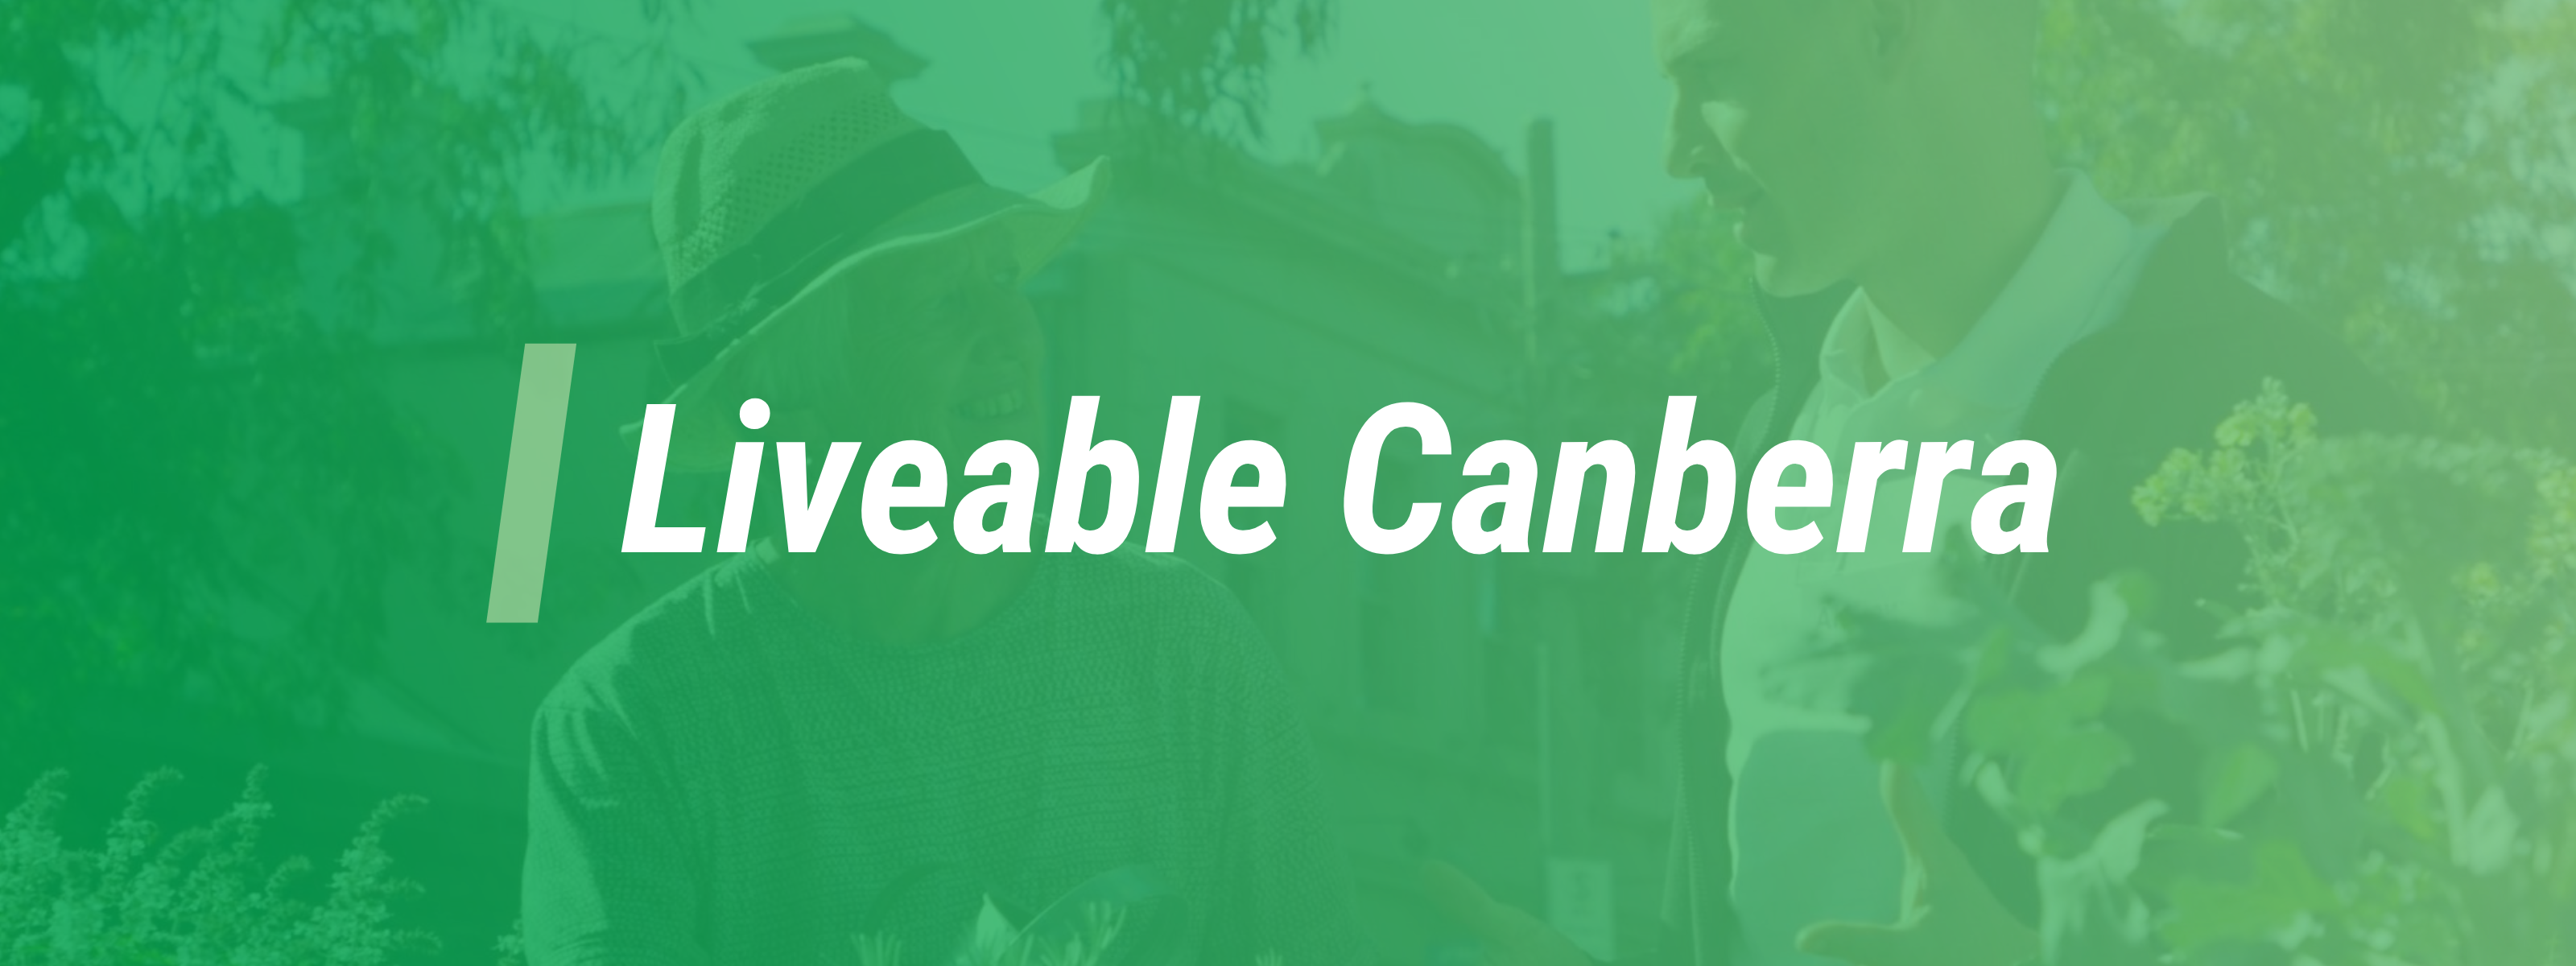 'Liveable Canberra'